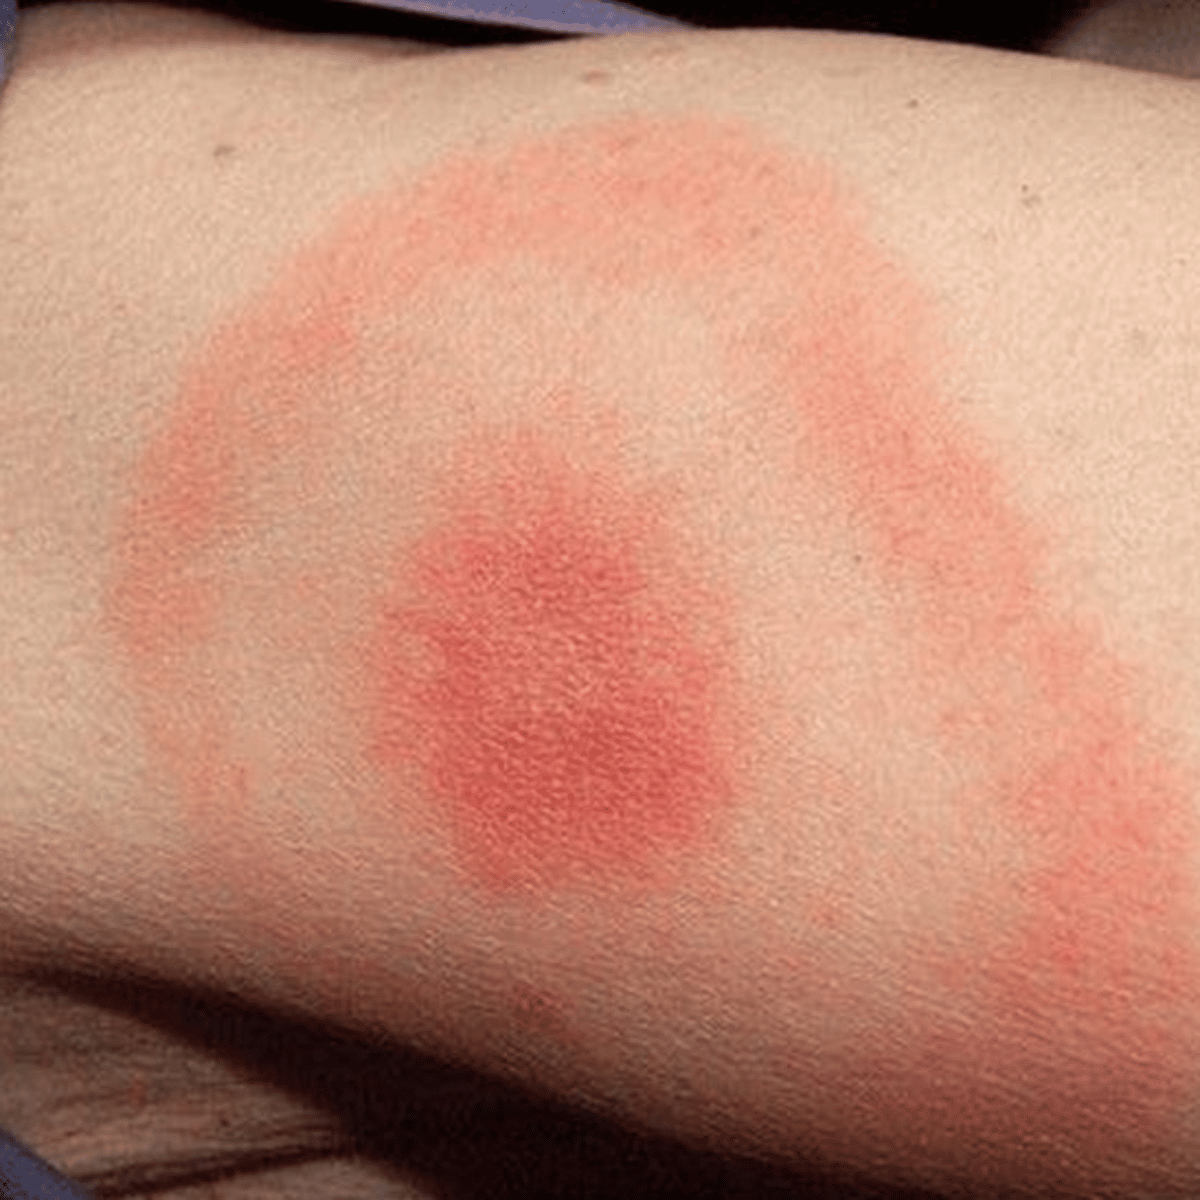 Lyme Disease Rashes